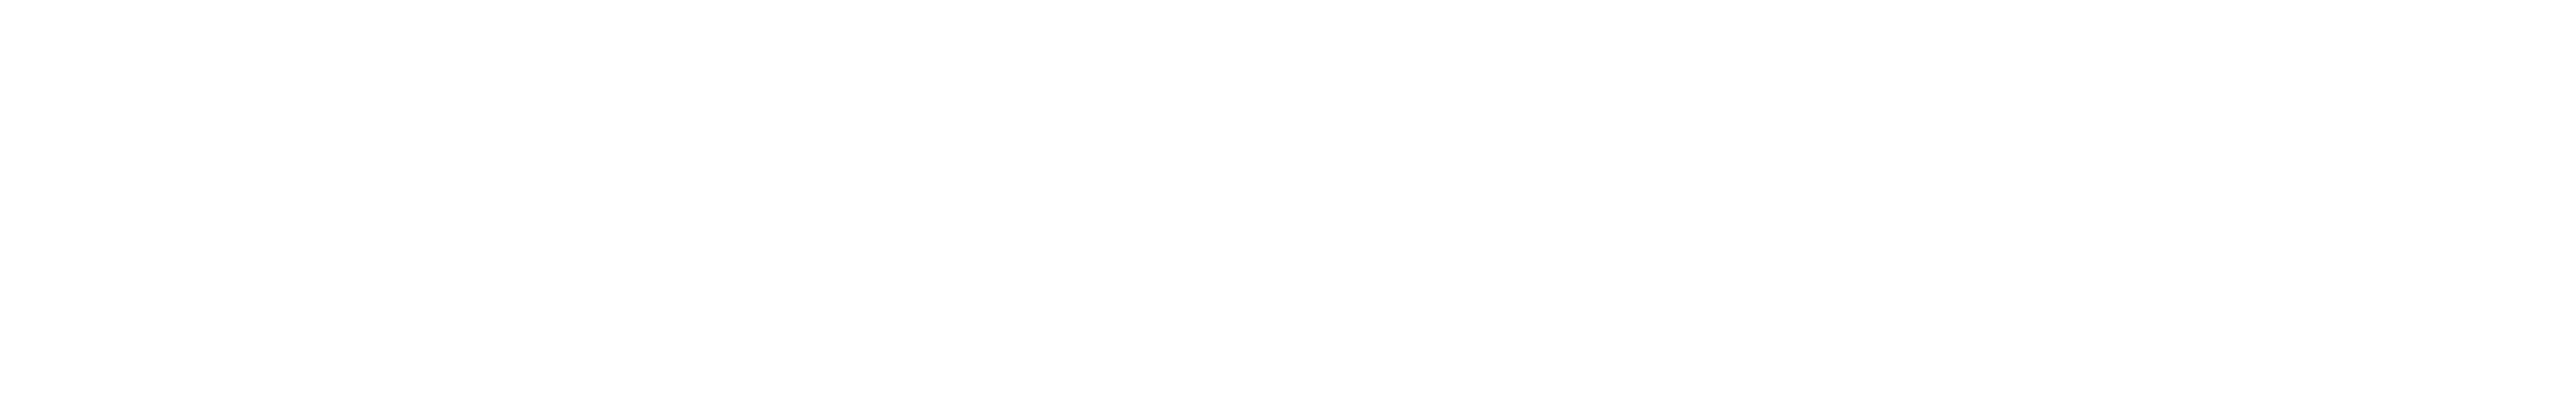 grid image